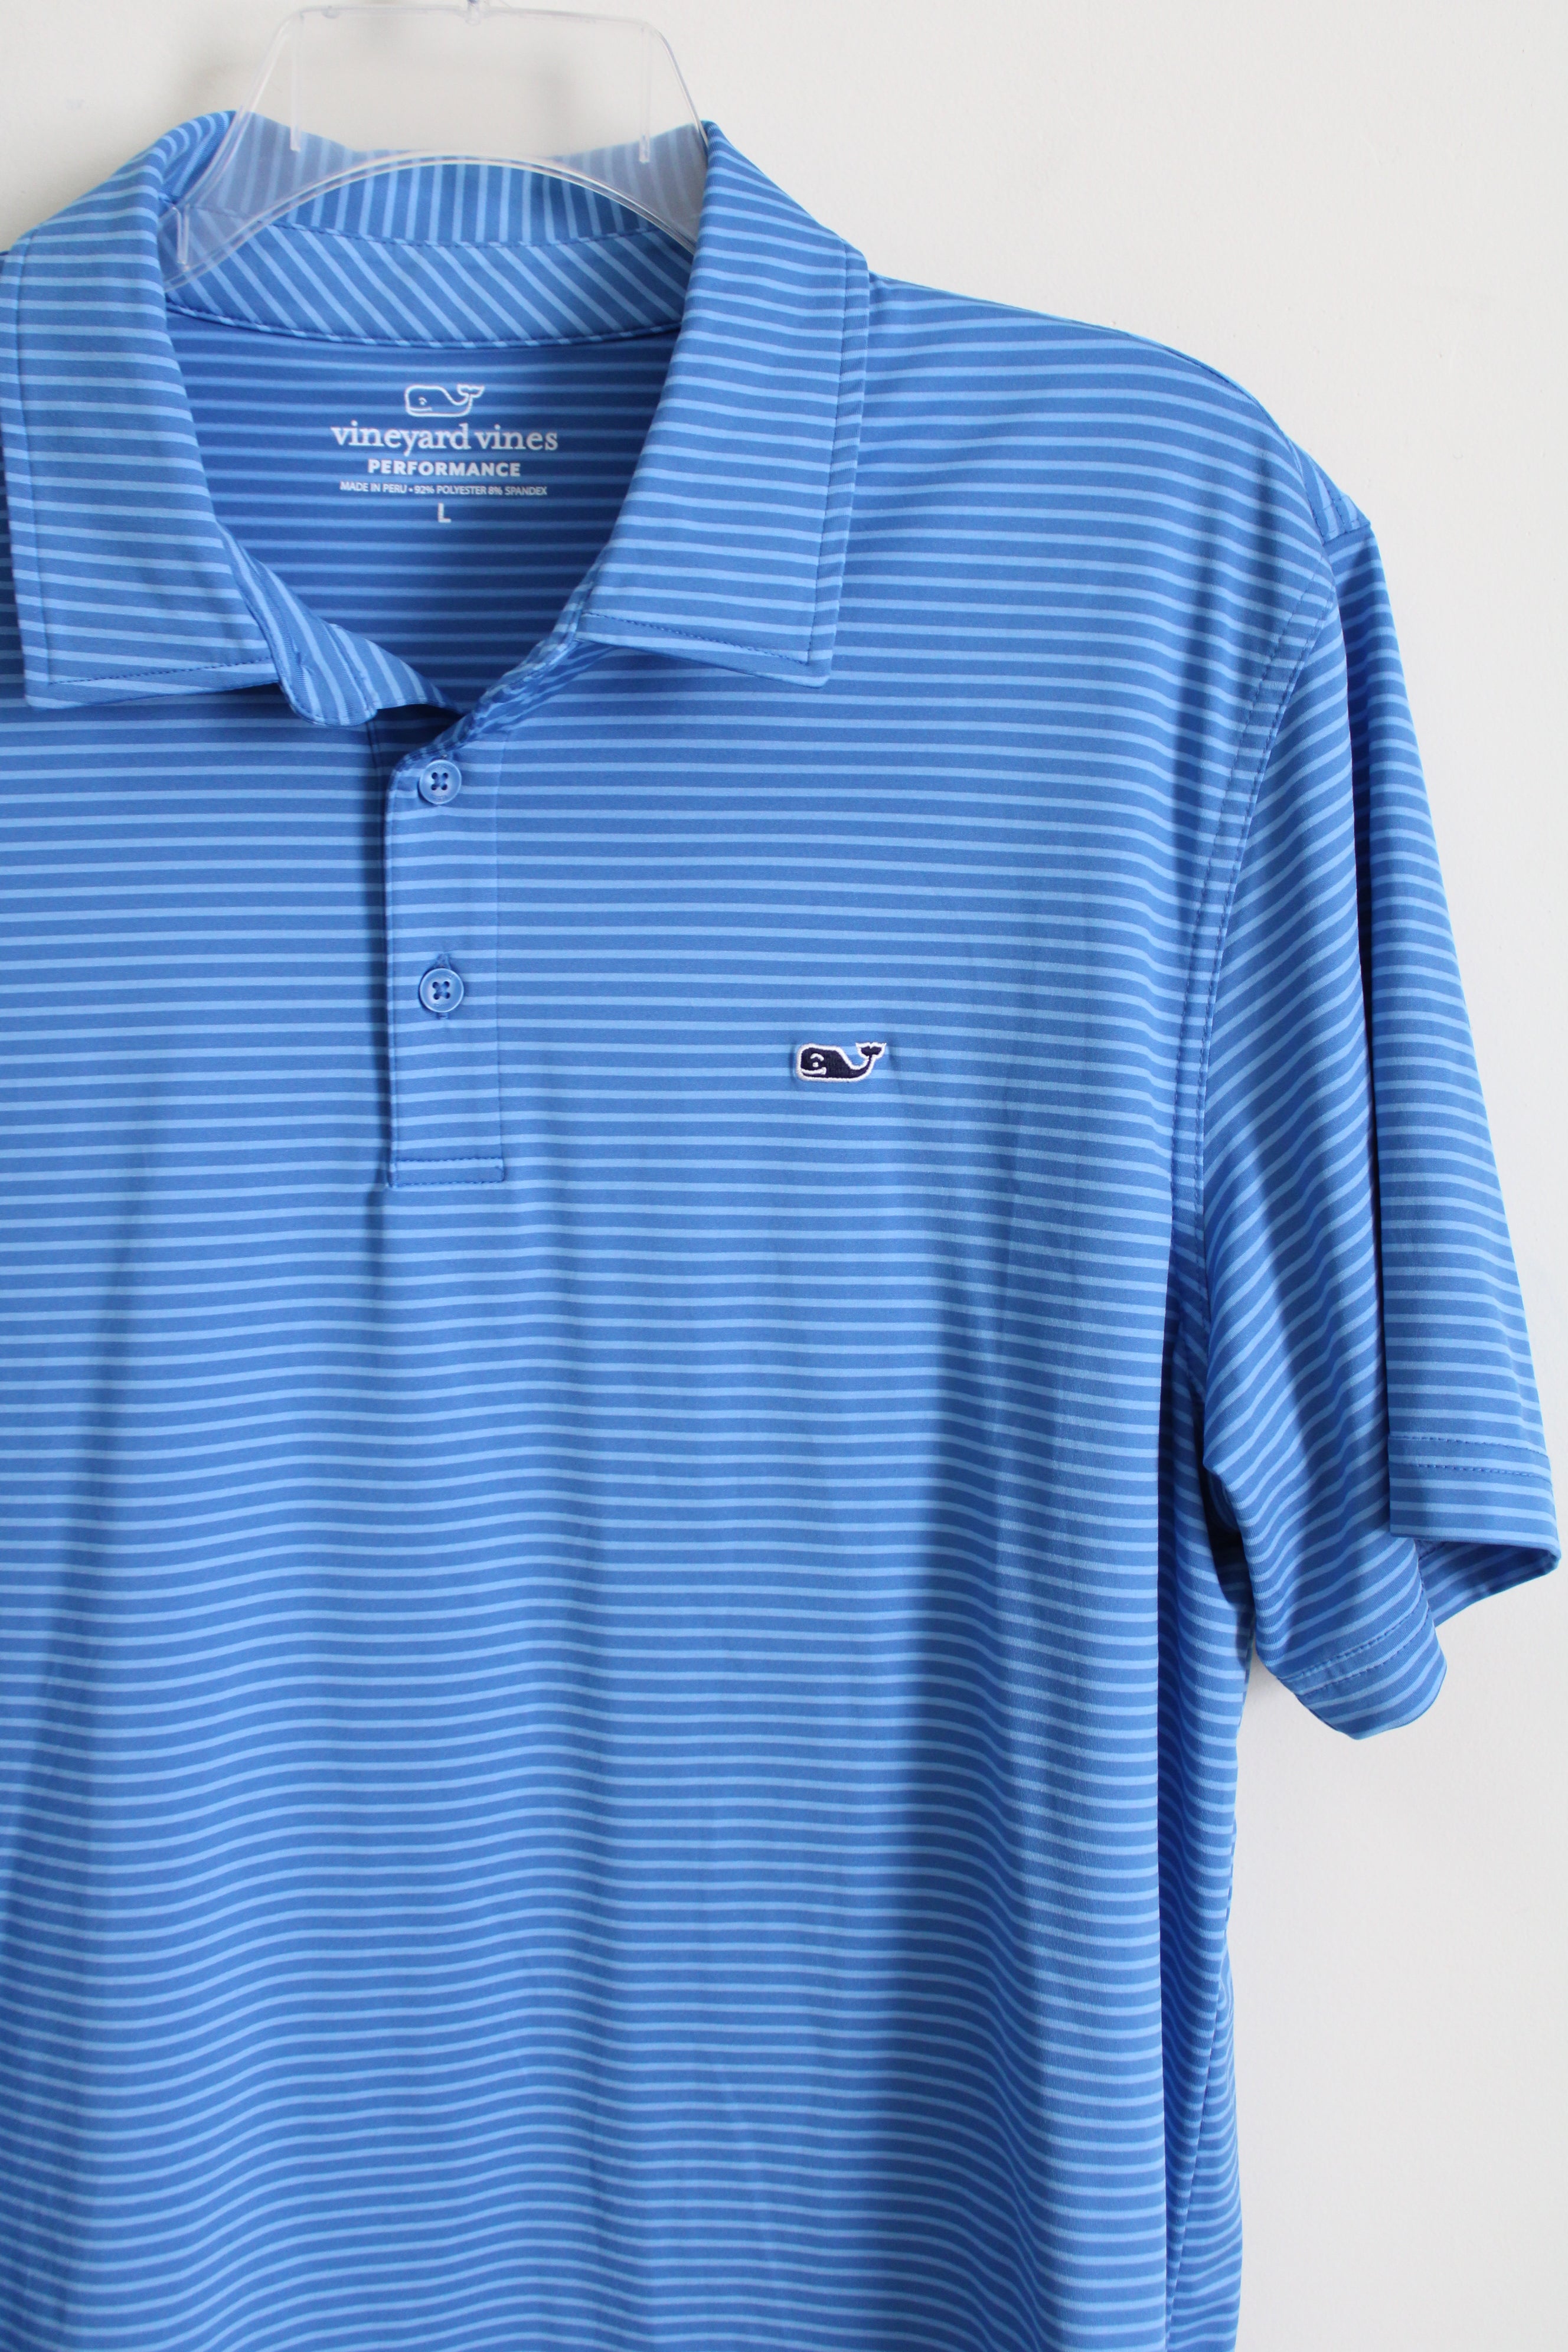 Vineyard Vines Blue Striped Polo Shirt | L